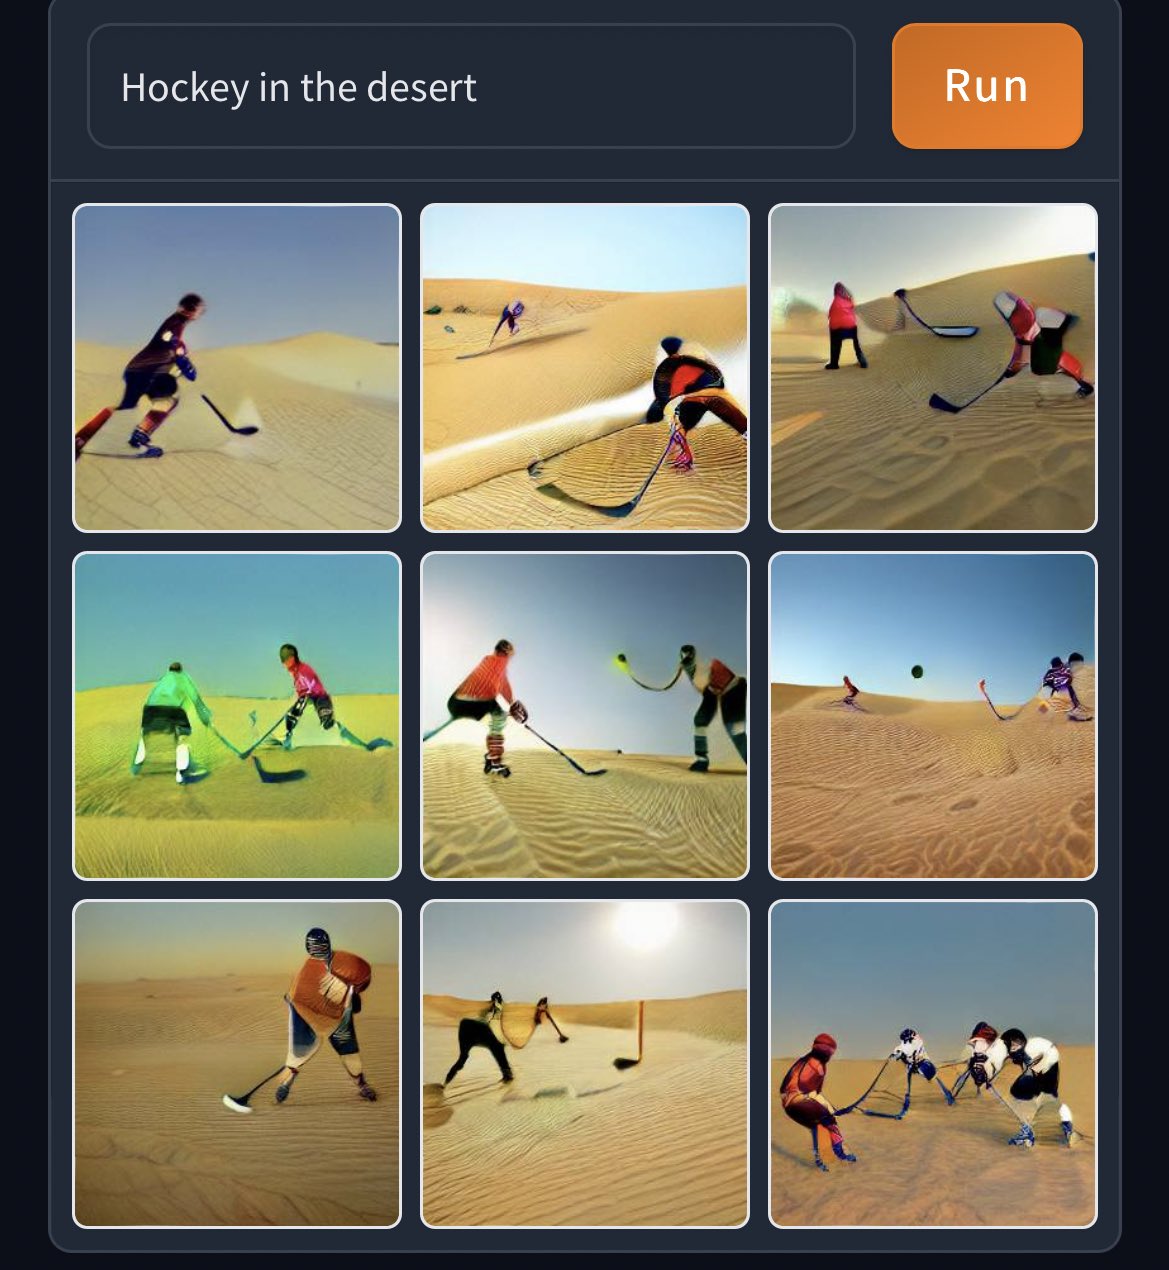 Dall-E Mini - games - Hockey in the desert Run